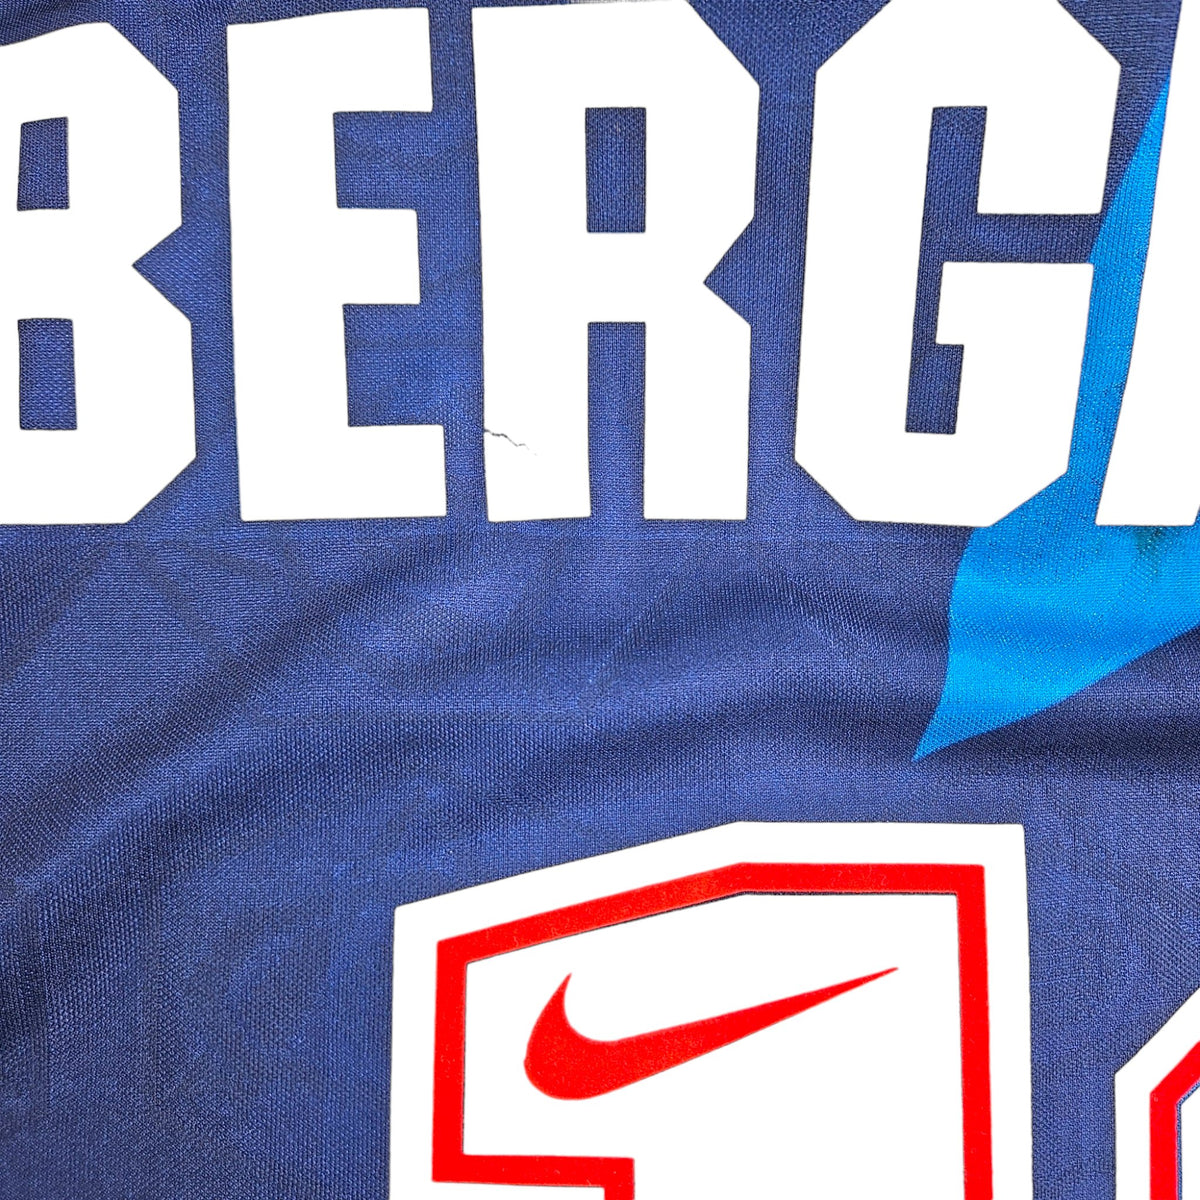 1995/96 Arsenal Away Football Shirt (XL) Nike #10 Bergkamp - Football Finery - FF203719